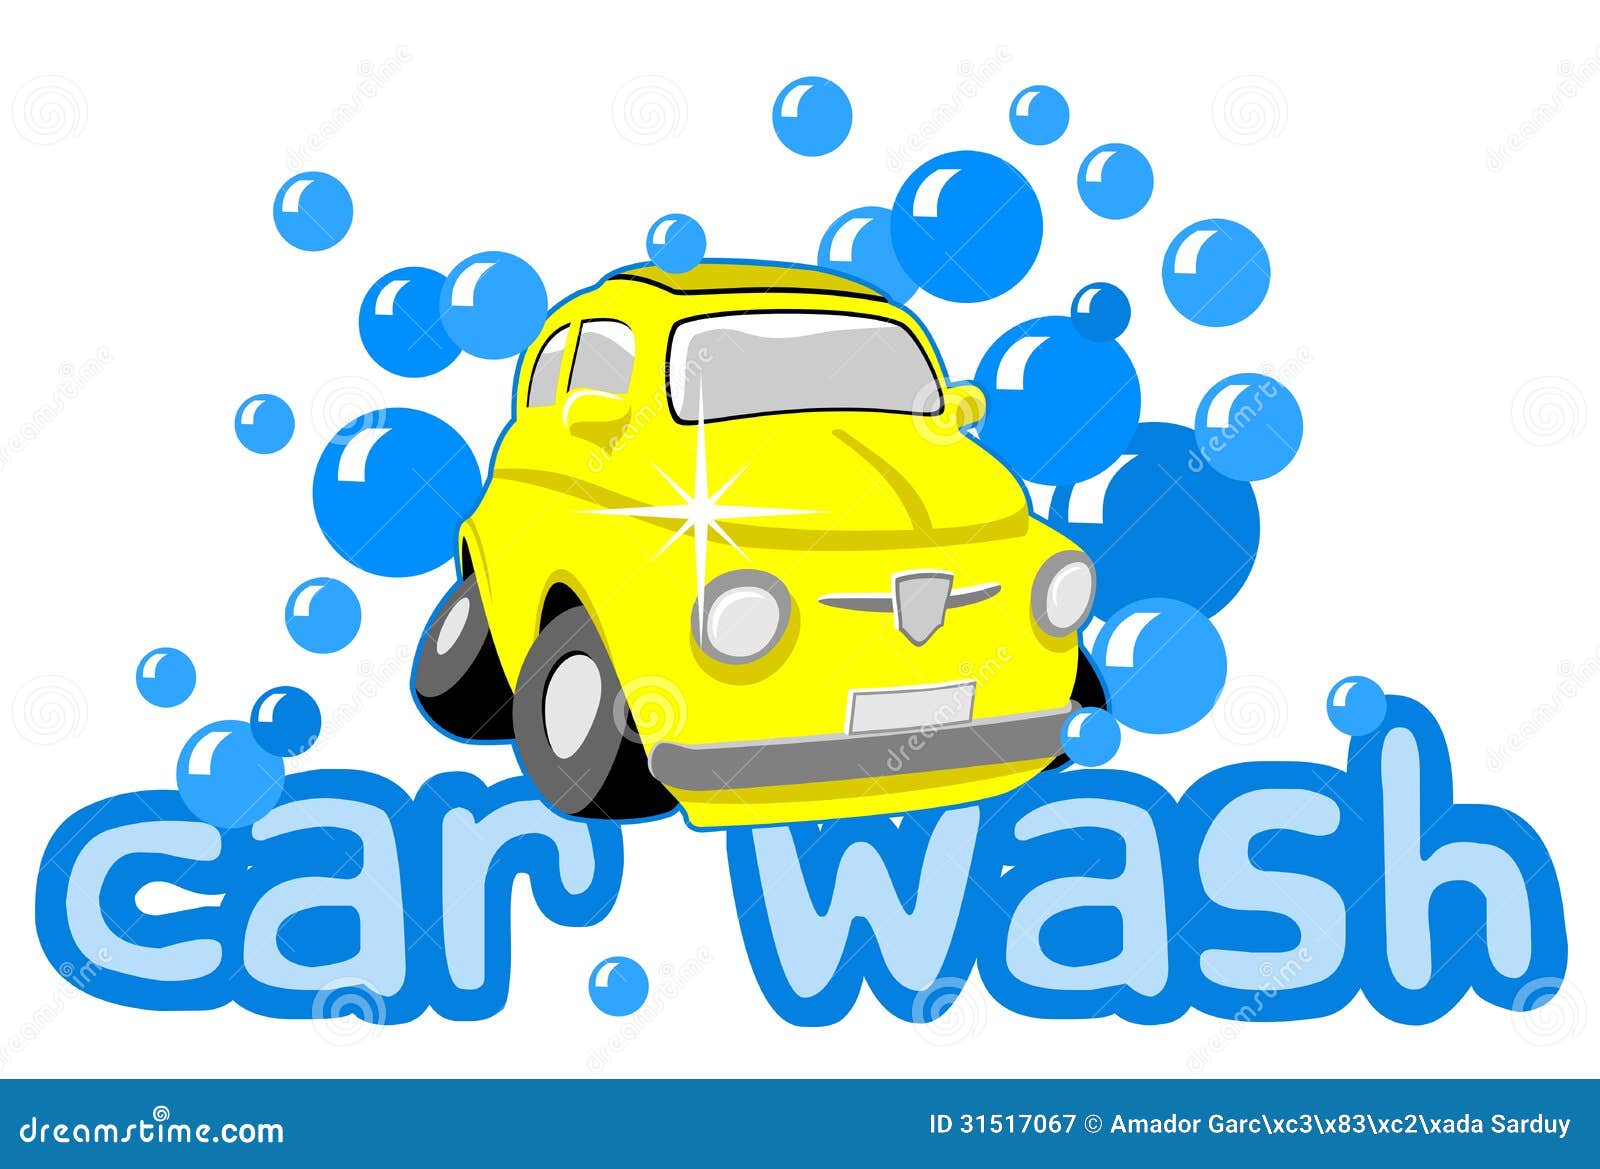 car wash clipart free - photo #41